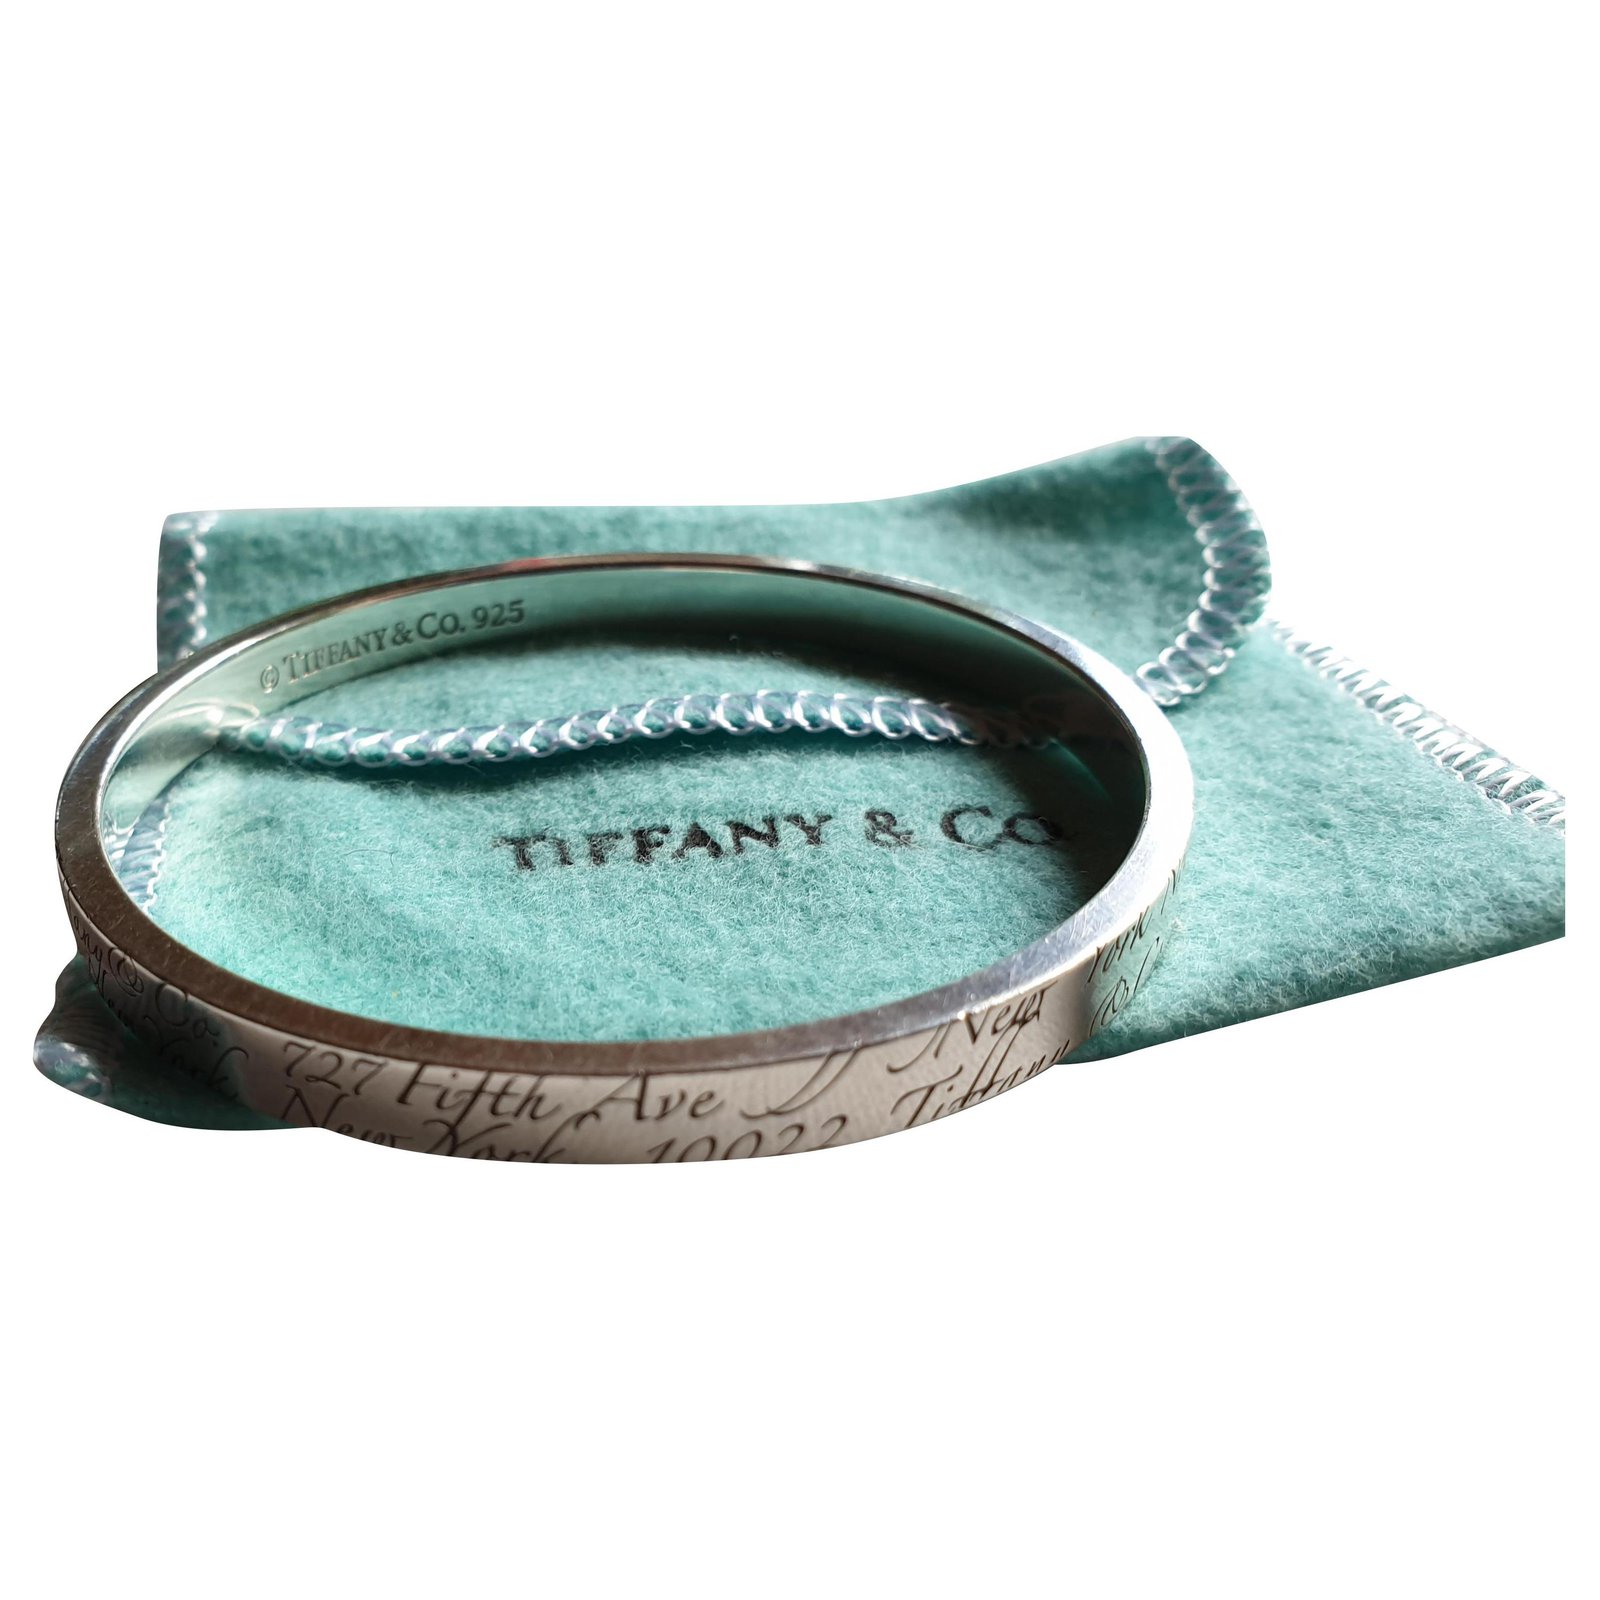 tiffany & co bangles silver